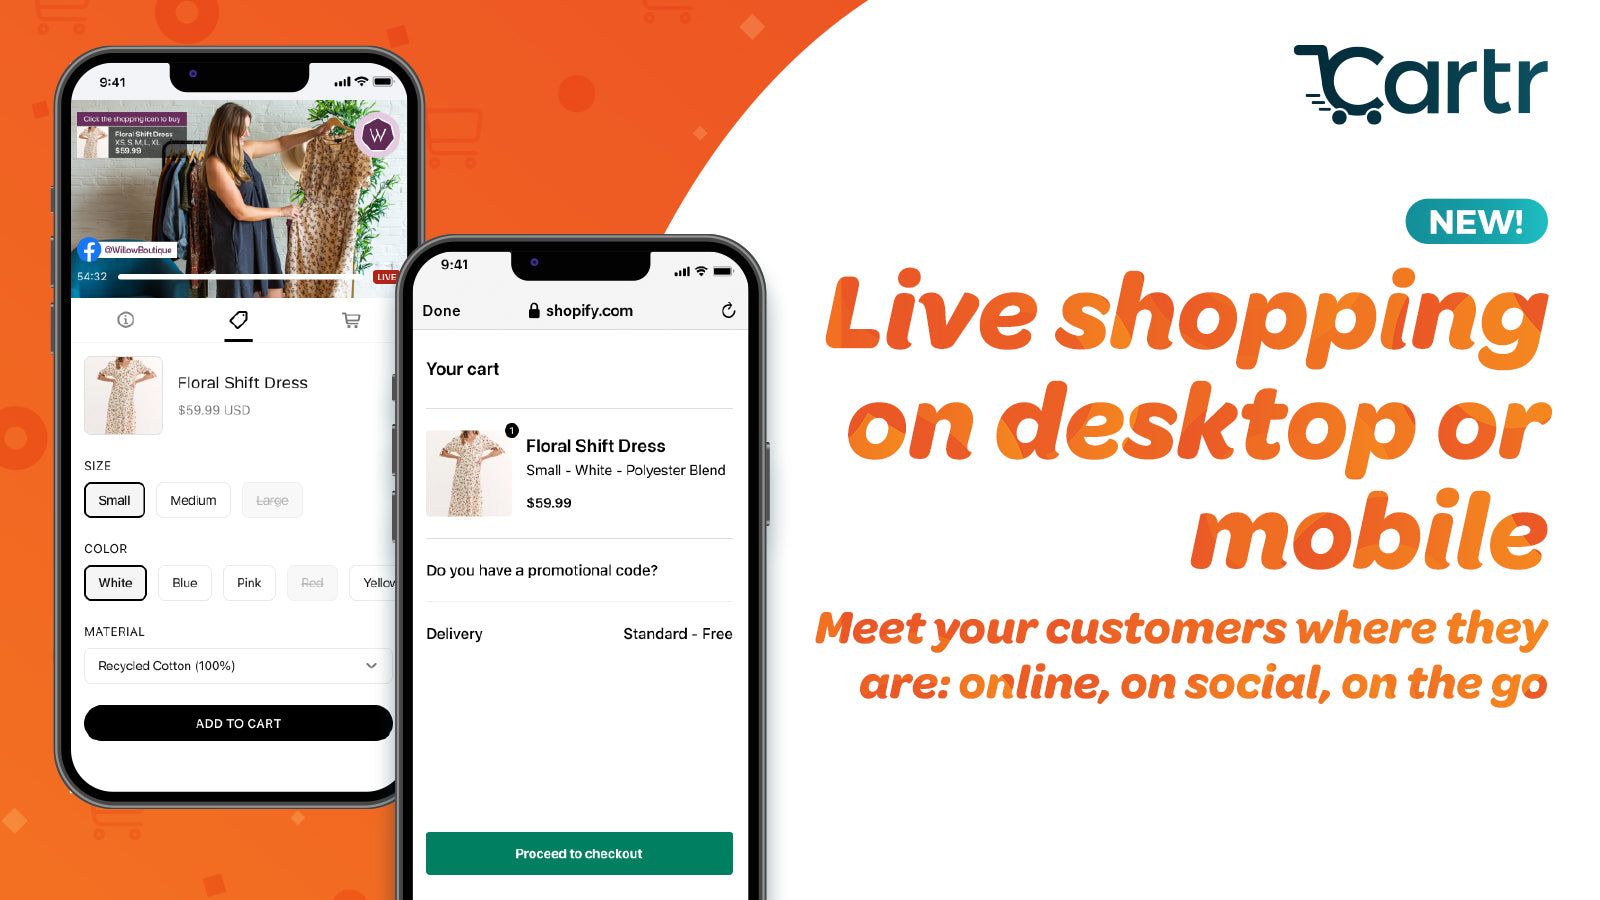 Live shopping on desktop or mobile